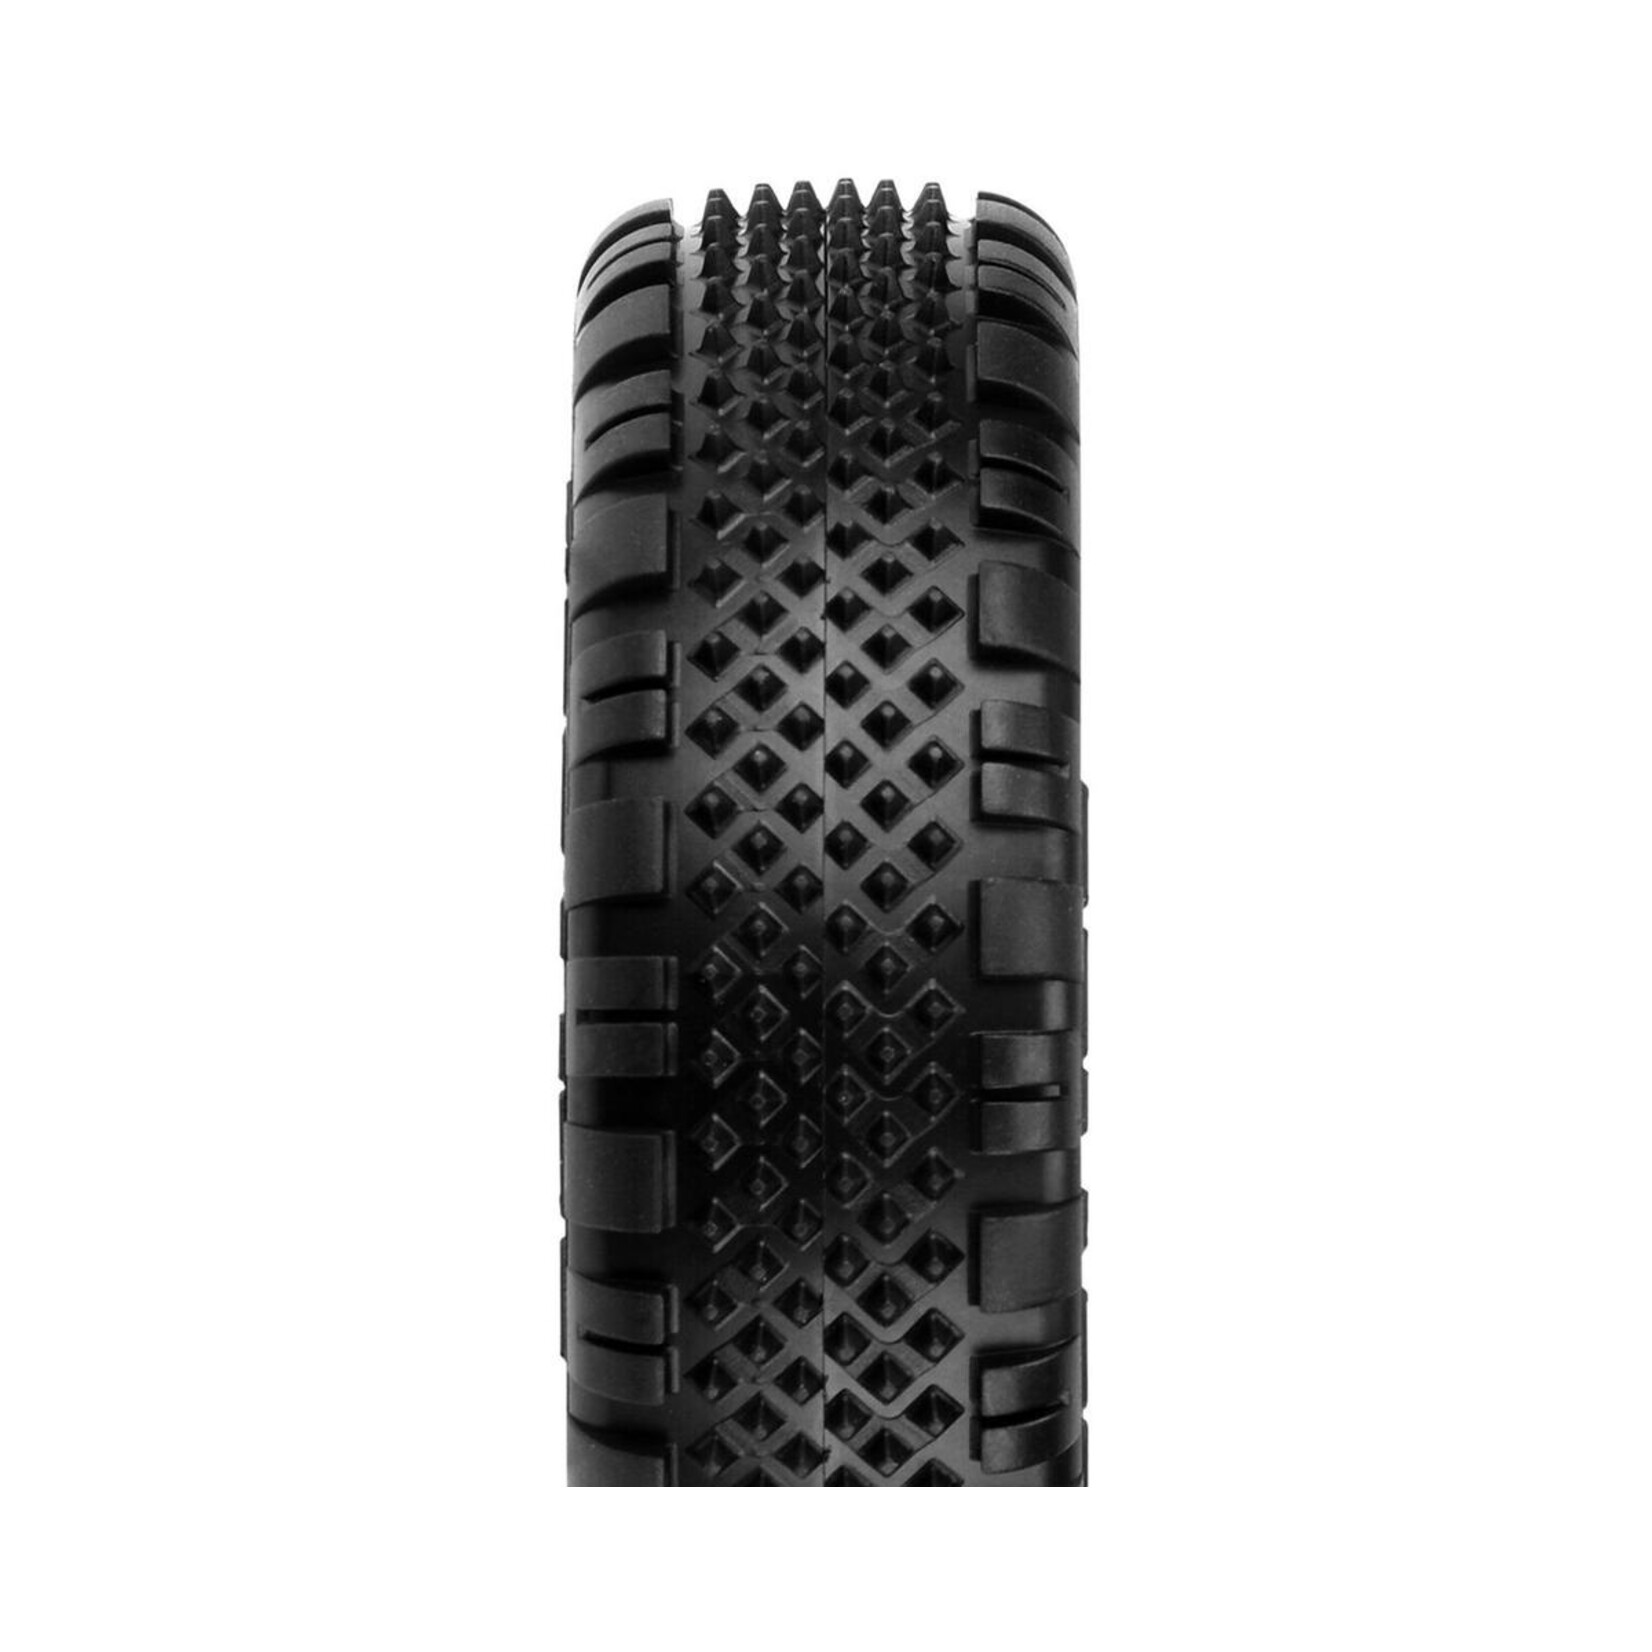 Pro-Line Pro-Line Prism Front 2.2" 2WD Buggy Carpet Tires (2) (CR4) #8278-304